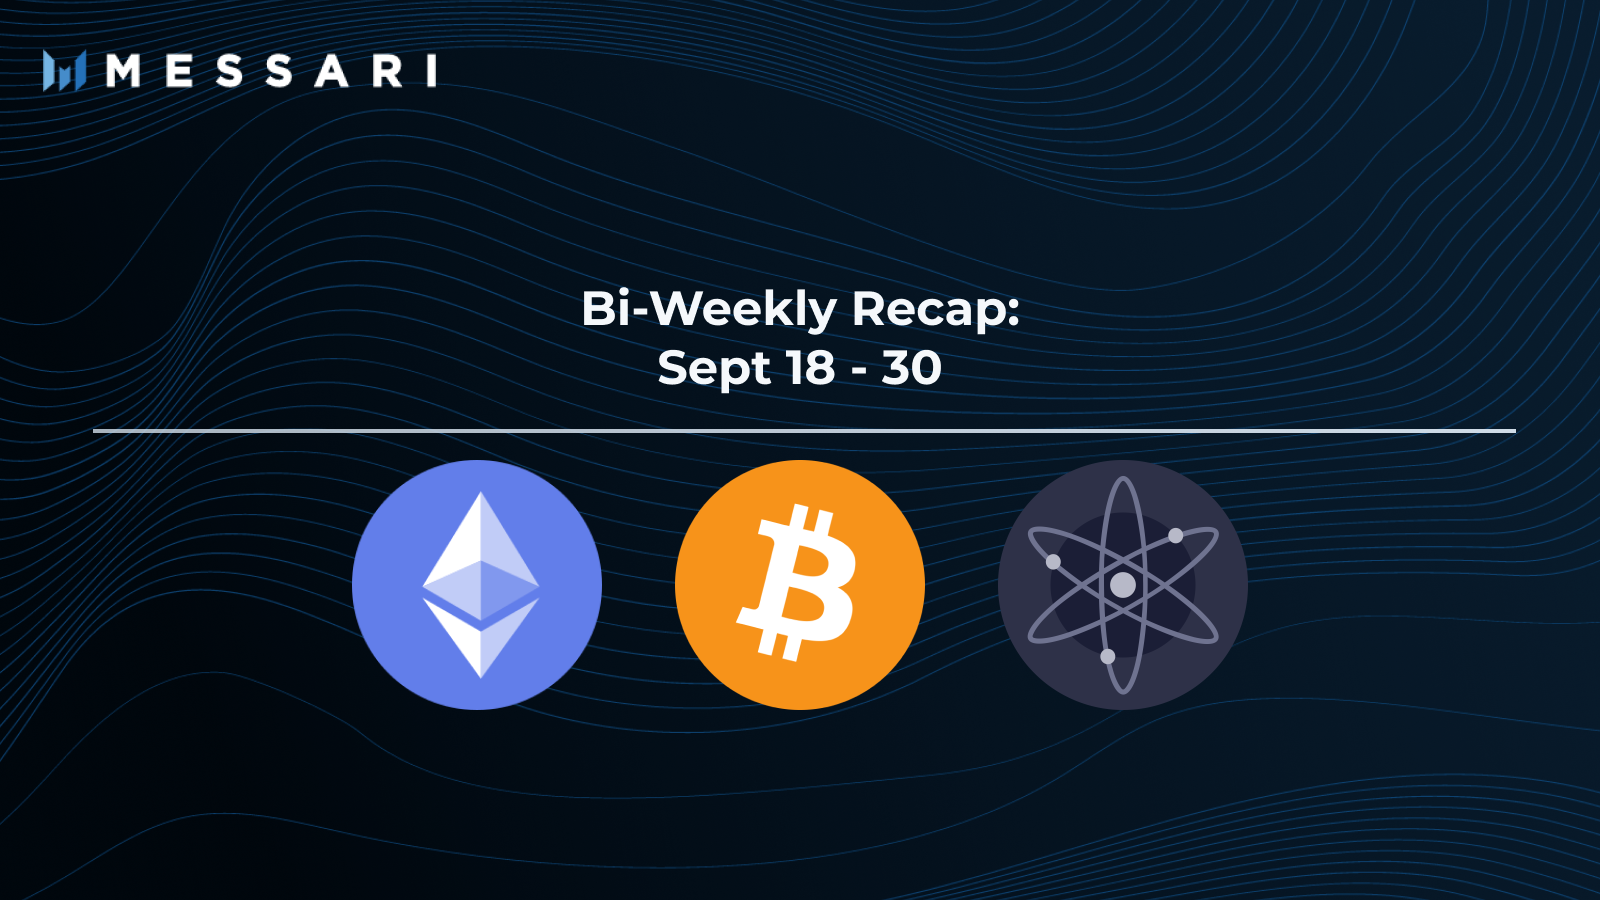 Bi-Weekly Recap: Sept 18 - 30